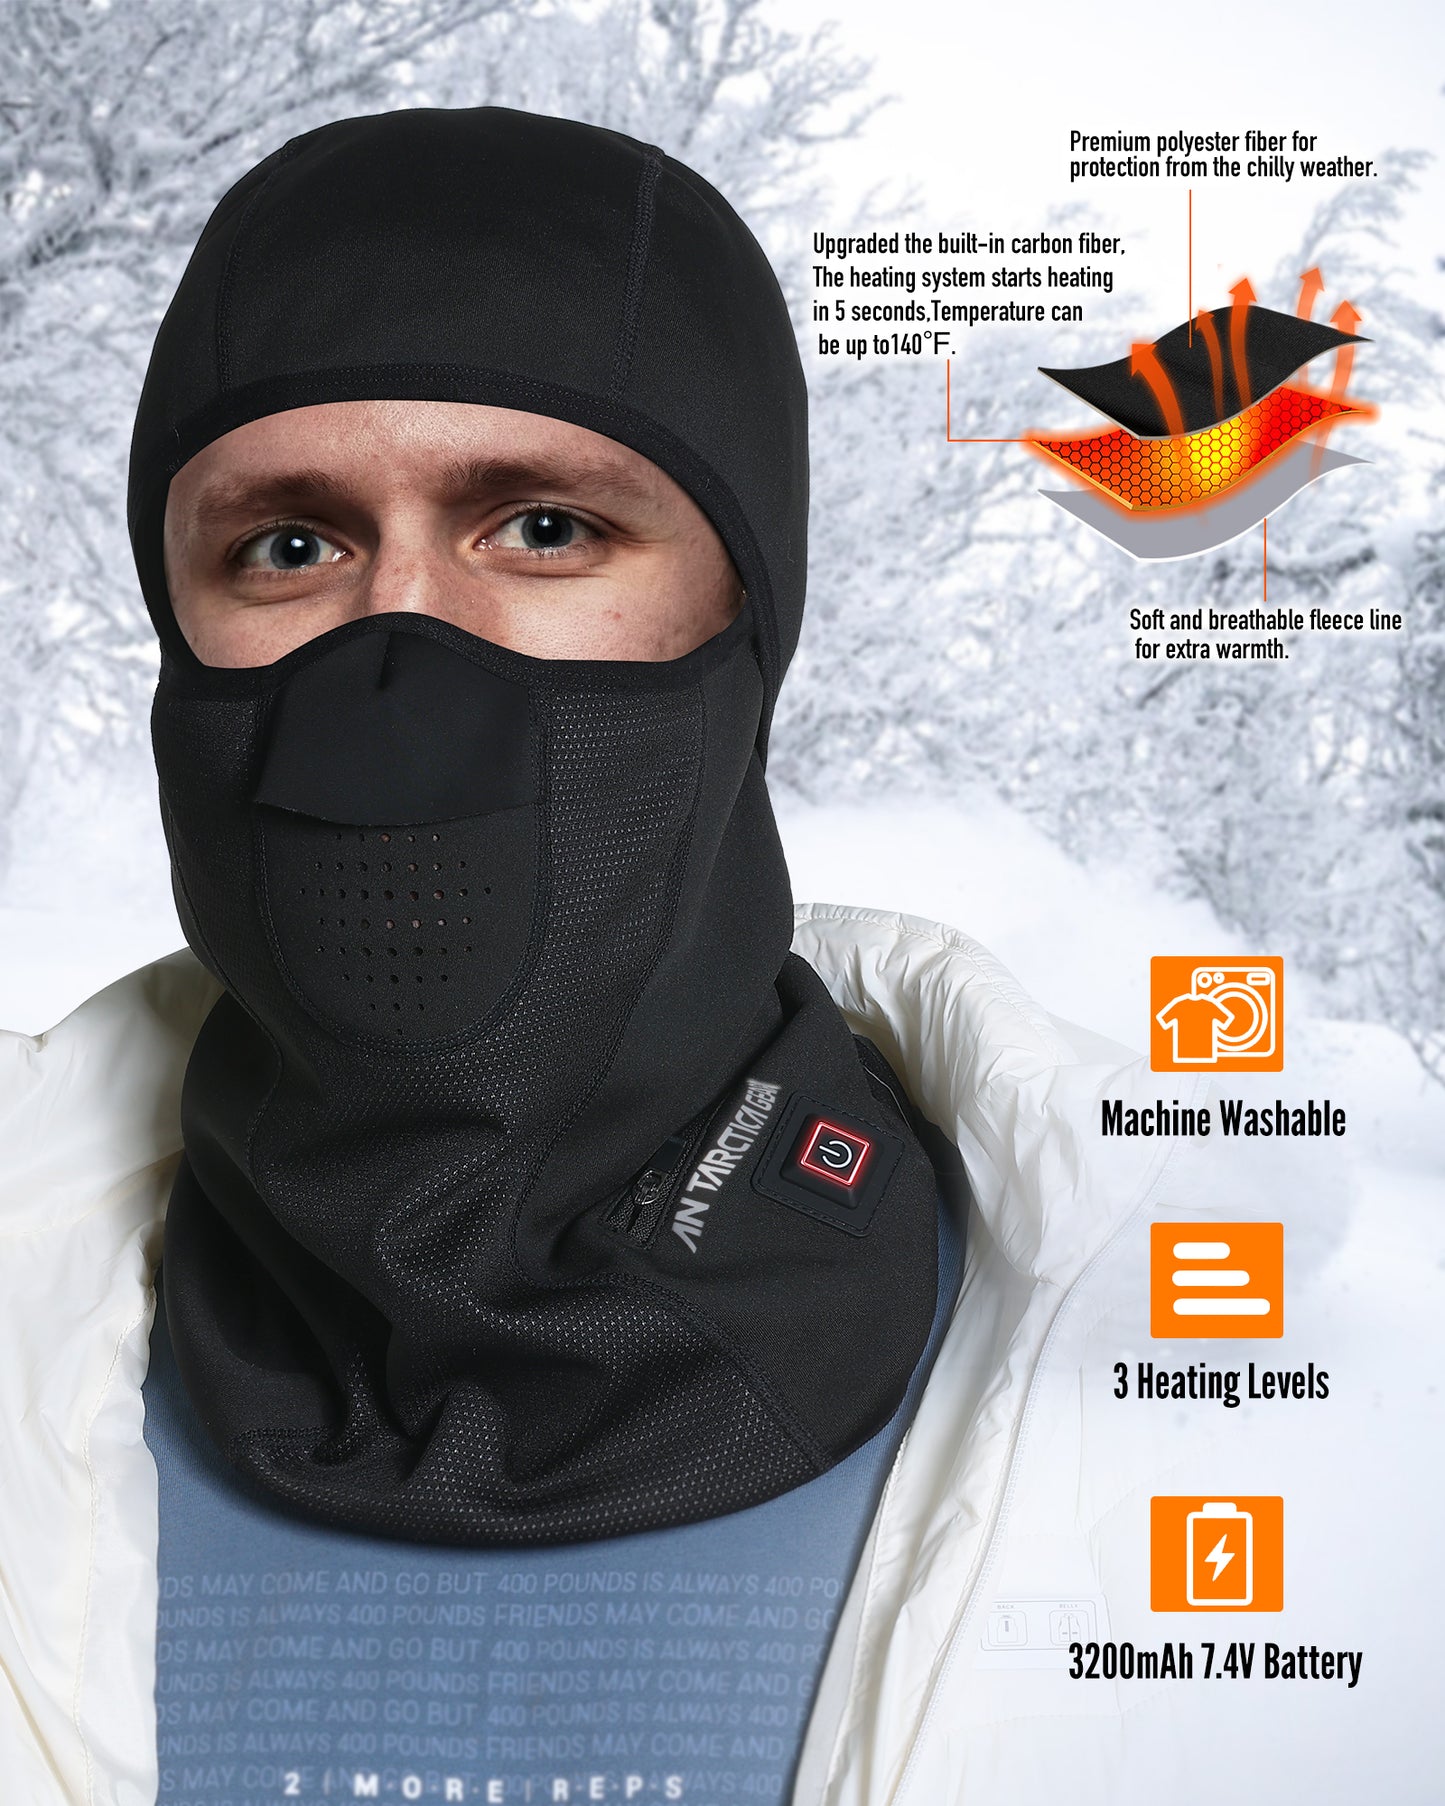 ANTARCTICA GEAR Heated Balaclava Face Ski Mask Windproof Warm Heating Hat For Motorcycle Riding Women Men